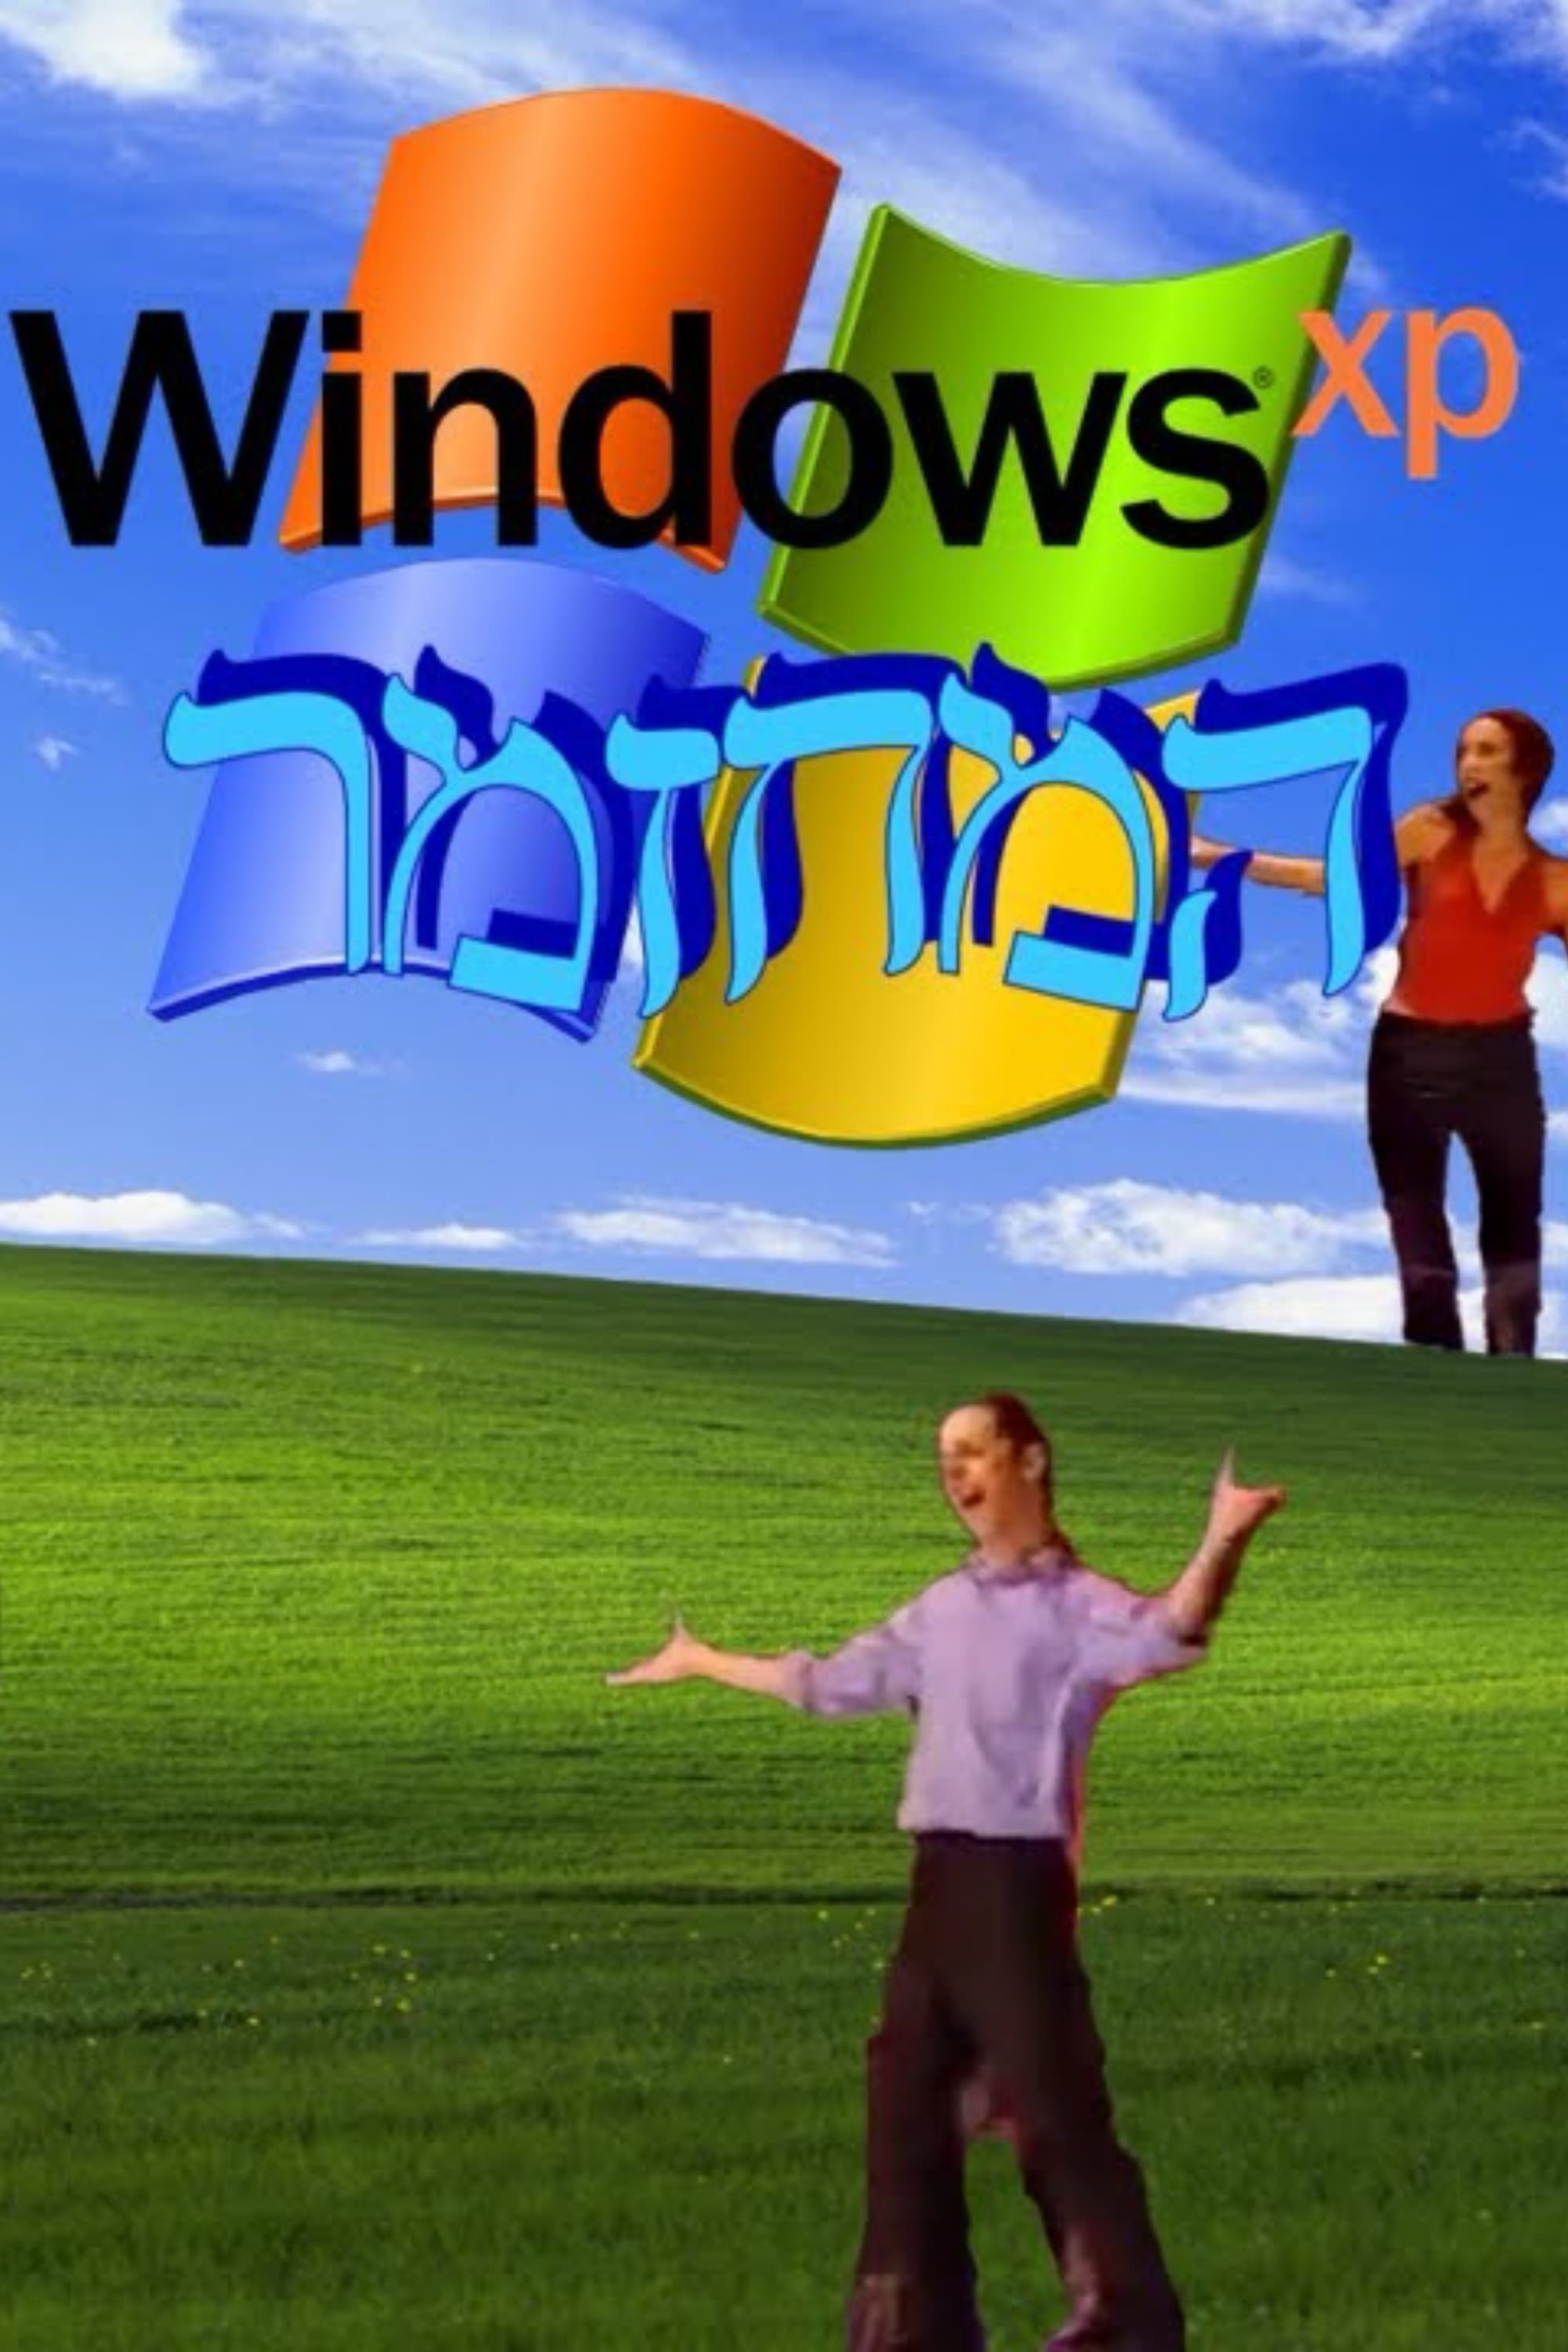 Windows XP: The Musical